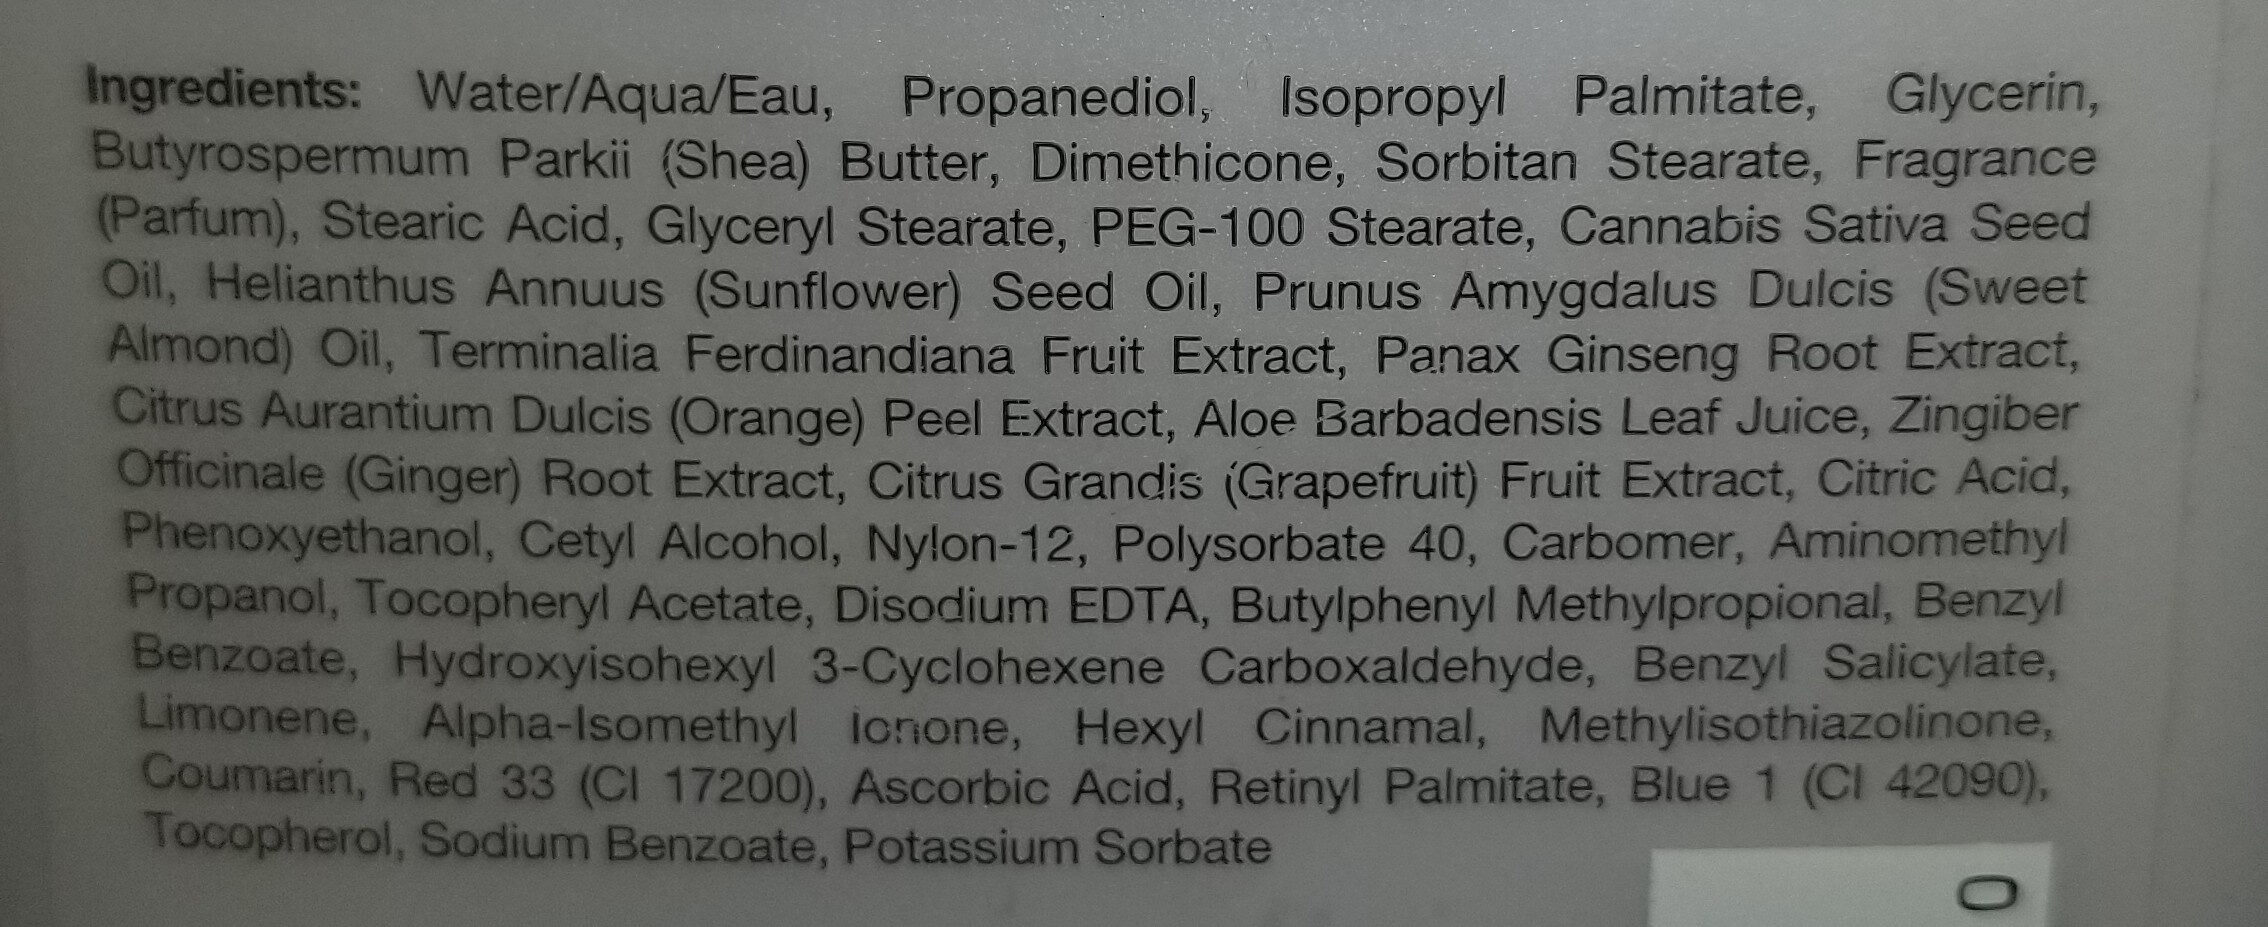 Vanilla Plum Herbal Body Moisturizer - Ingredients - en